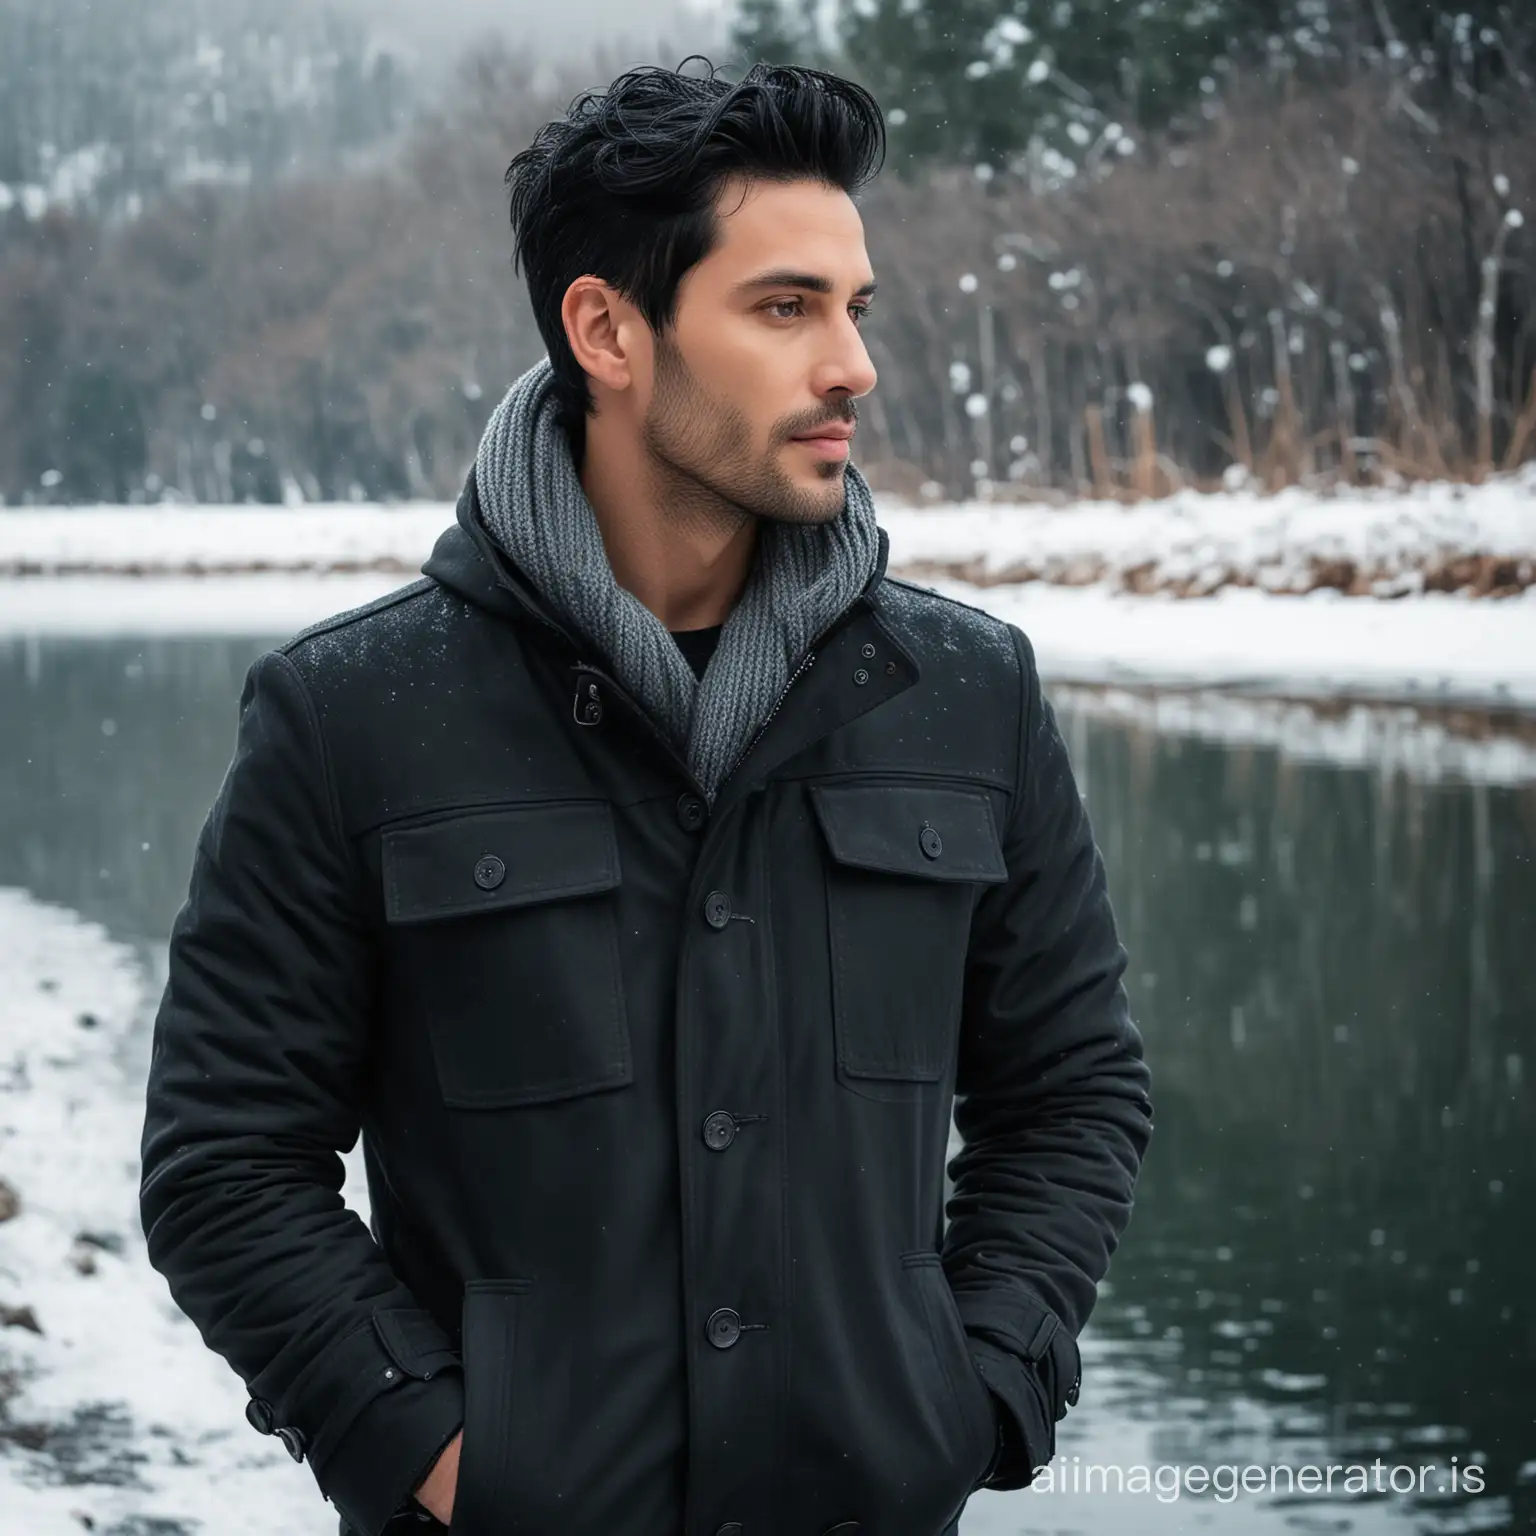 Stylish-Man-with-Black-Hair-Enjoying-Winter-Serenity-by-the-Lake